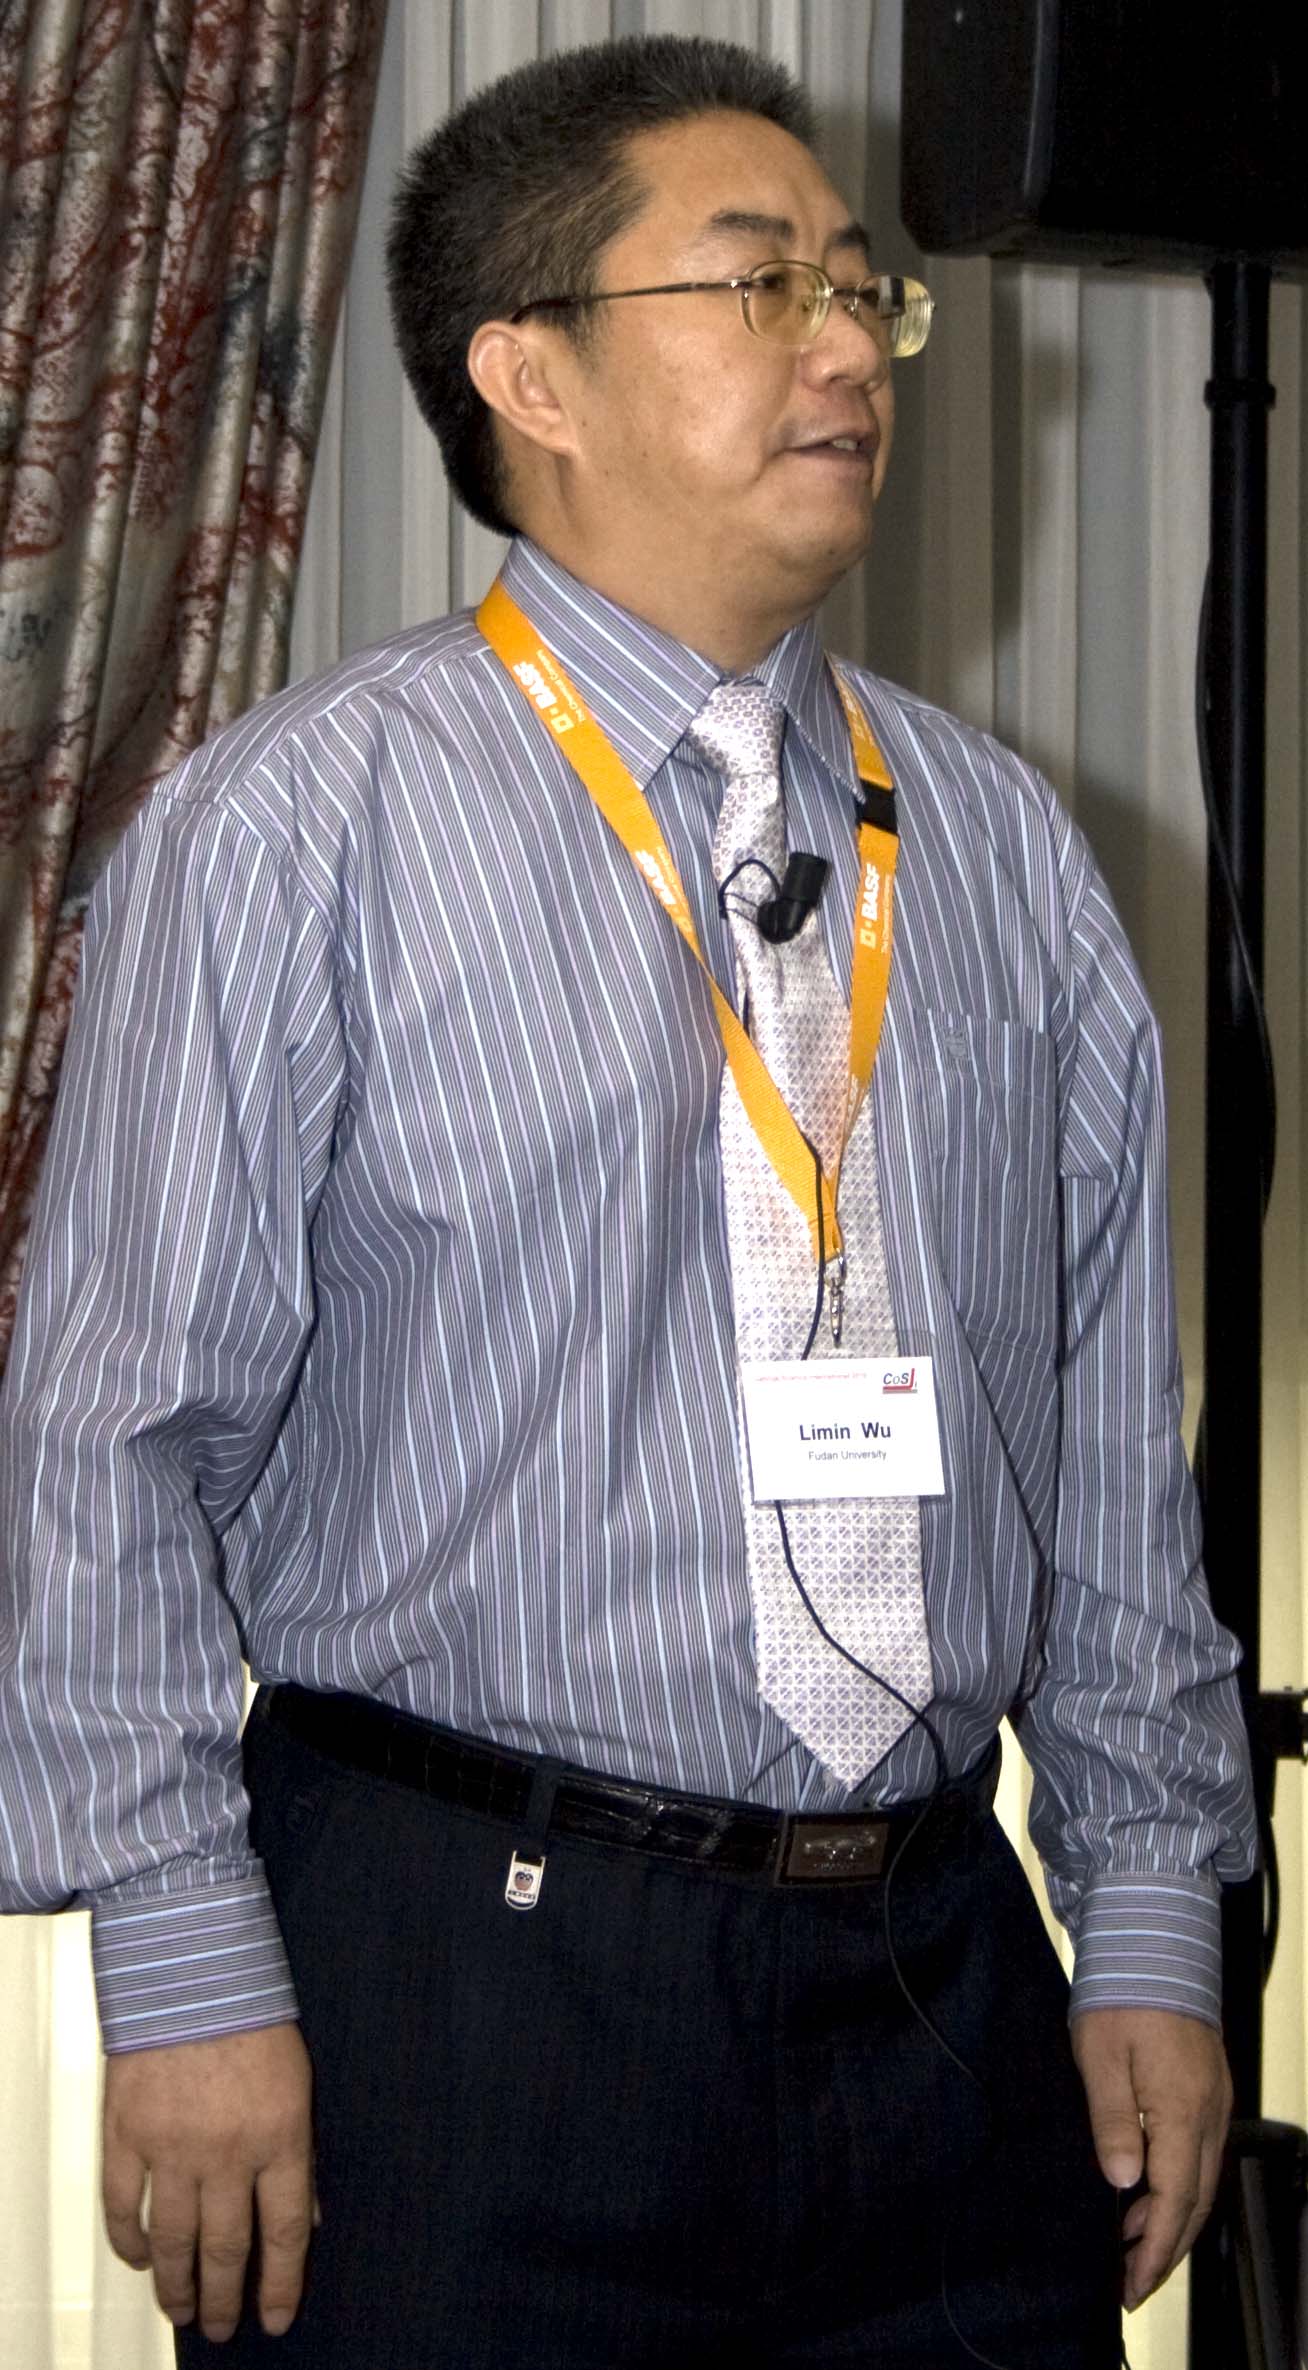 Professor Limin Wu